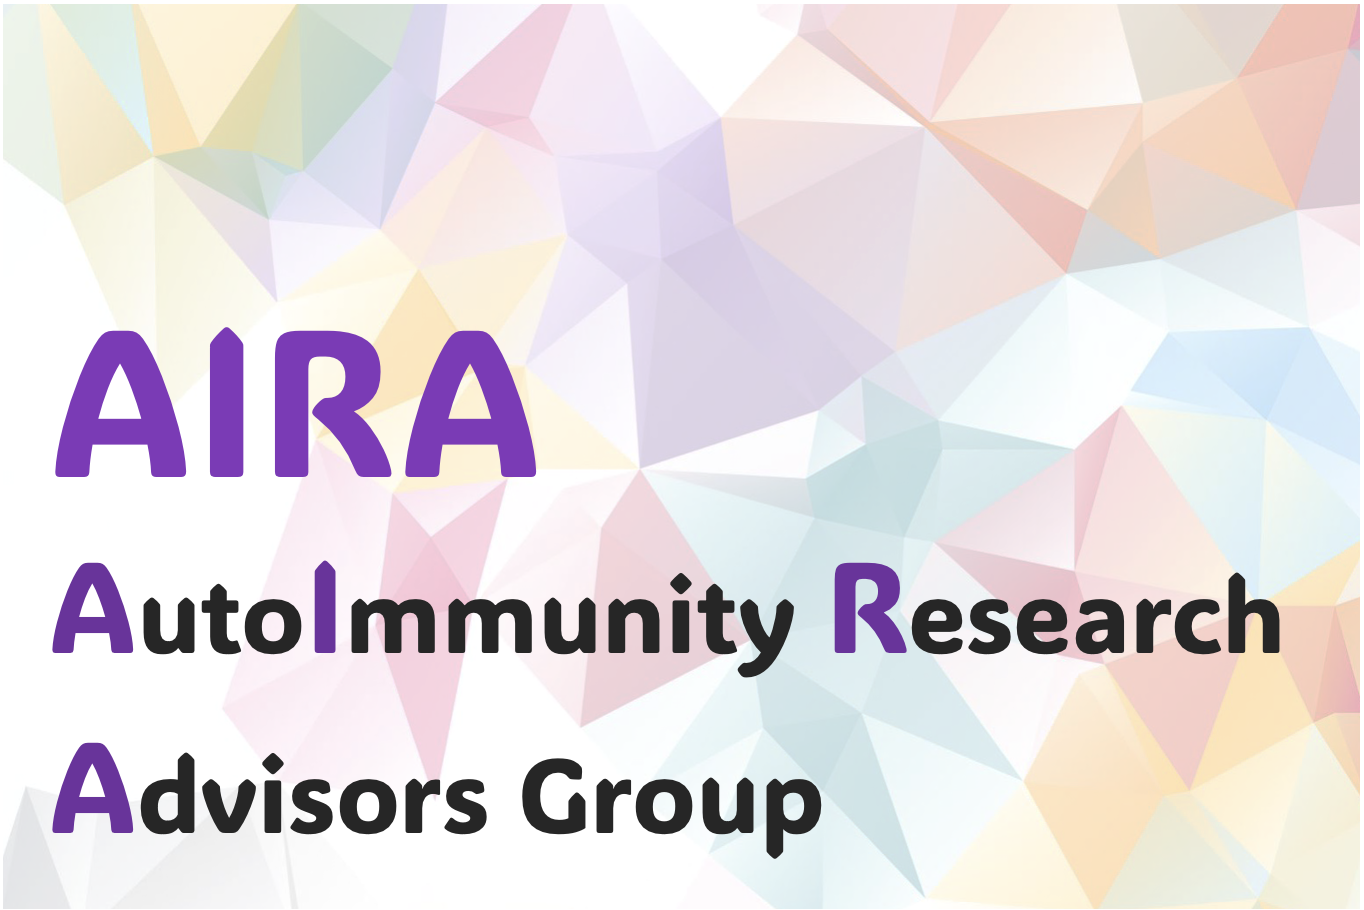 AutoImmunity Research Advisors Group (AIRA)